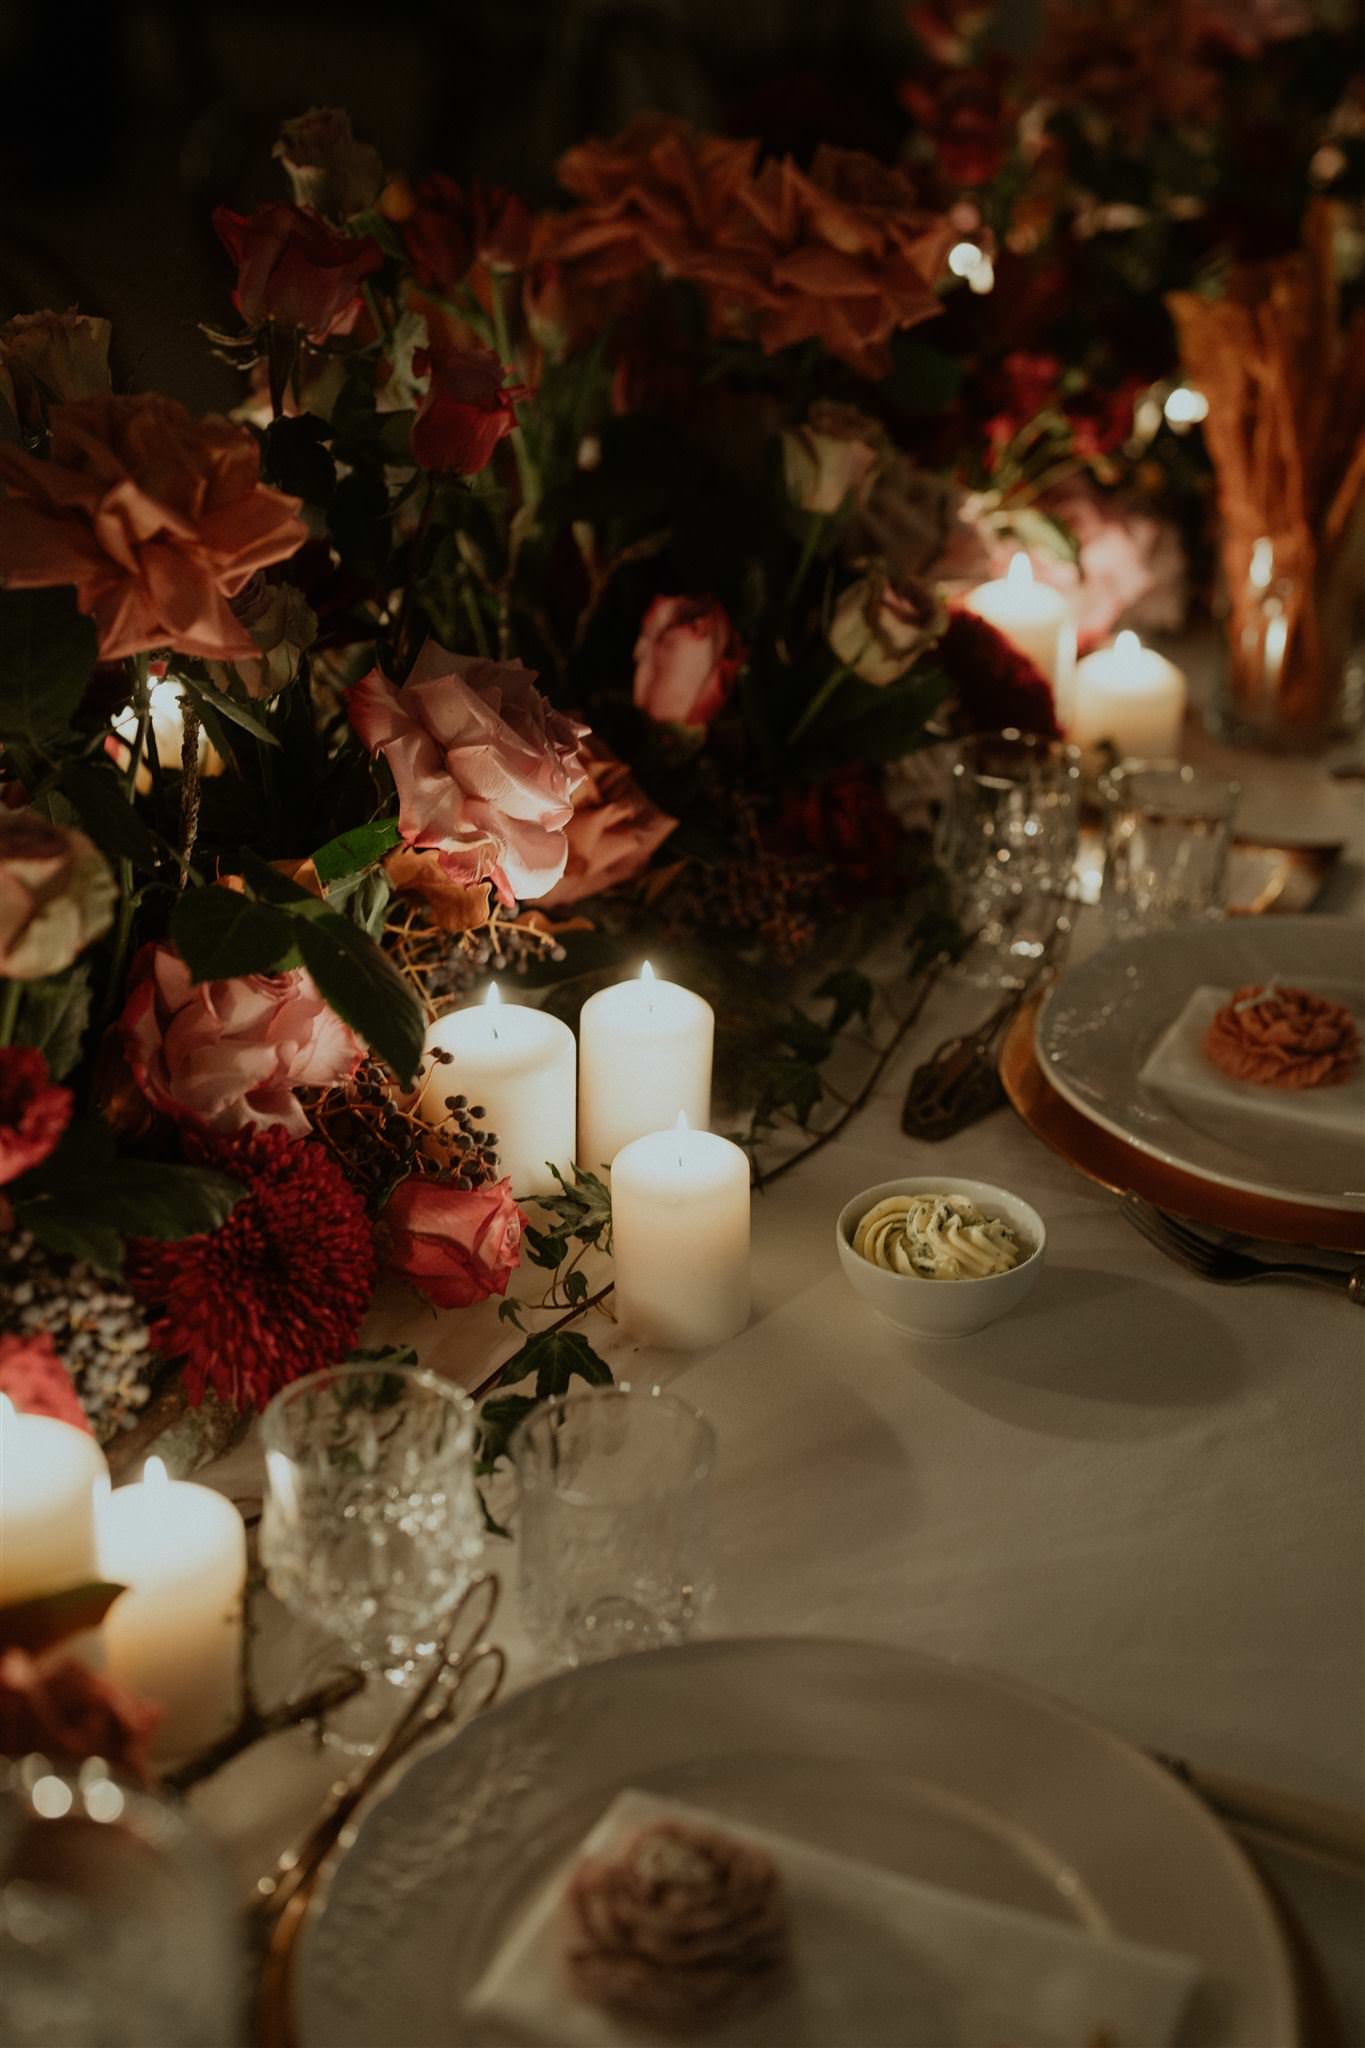 Photographer’s Guide to Wedding Lighting